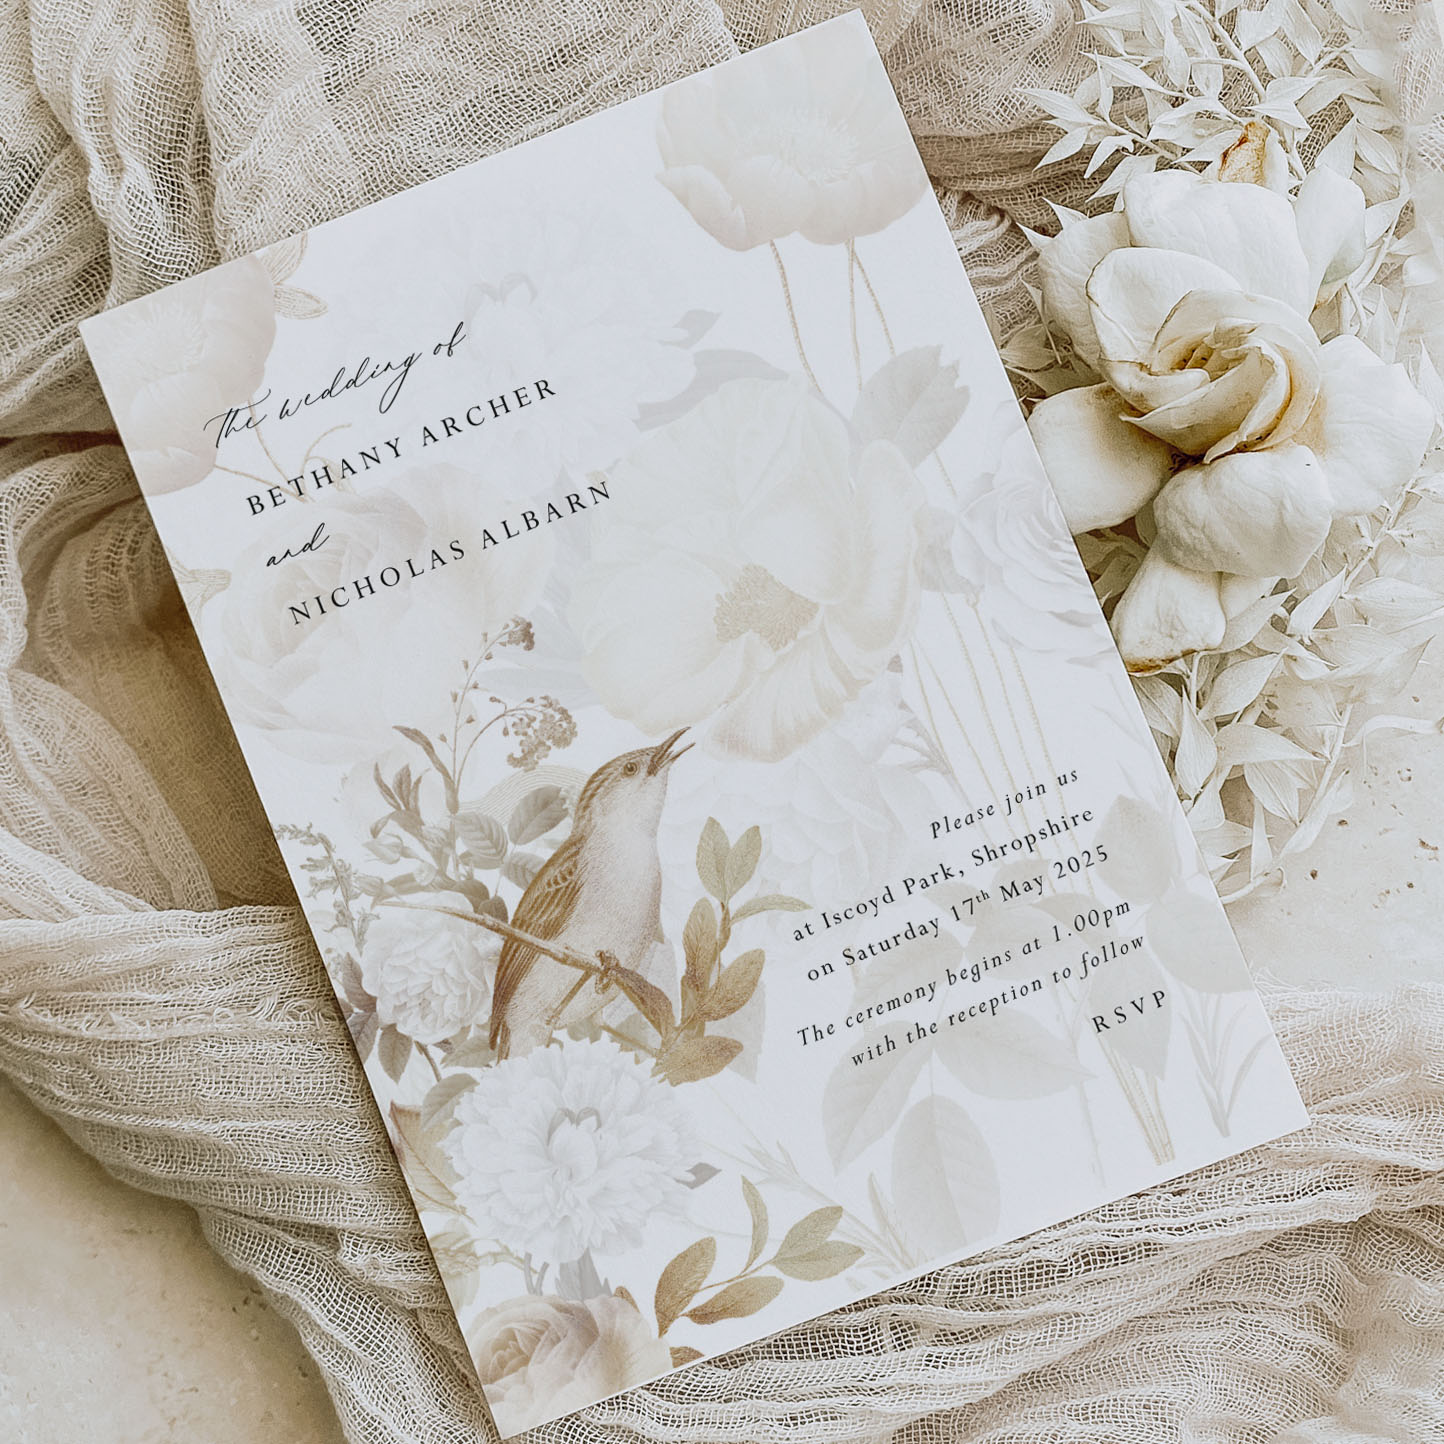 Songbird - romantic glamorous wedding stationery and invitations on cream fabric